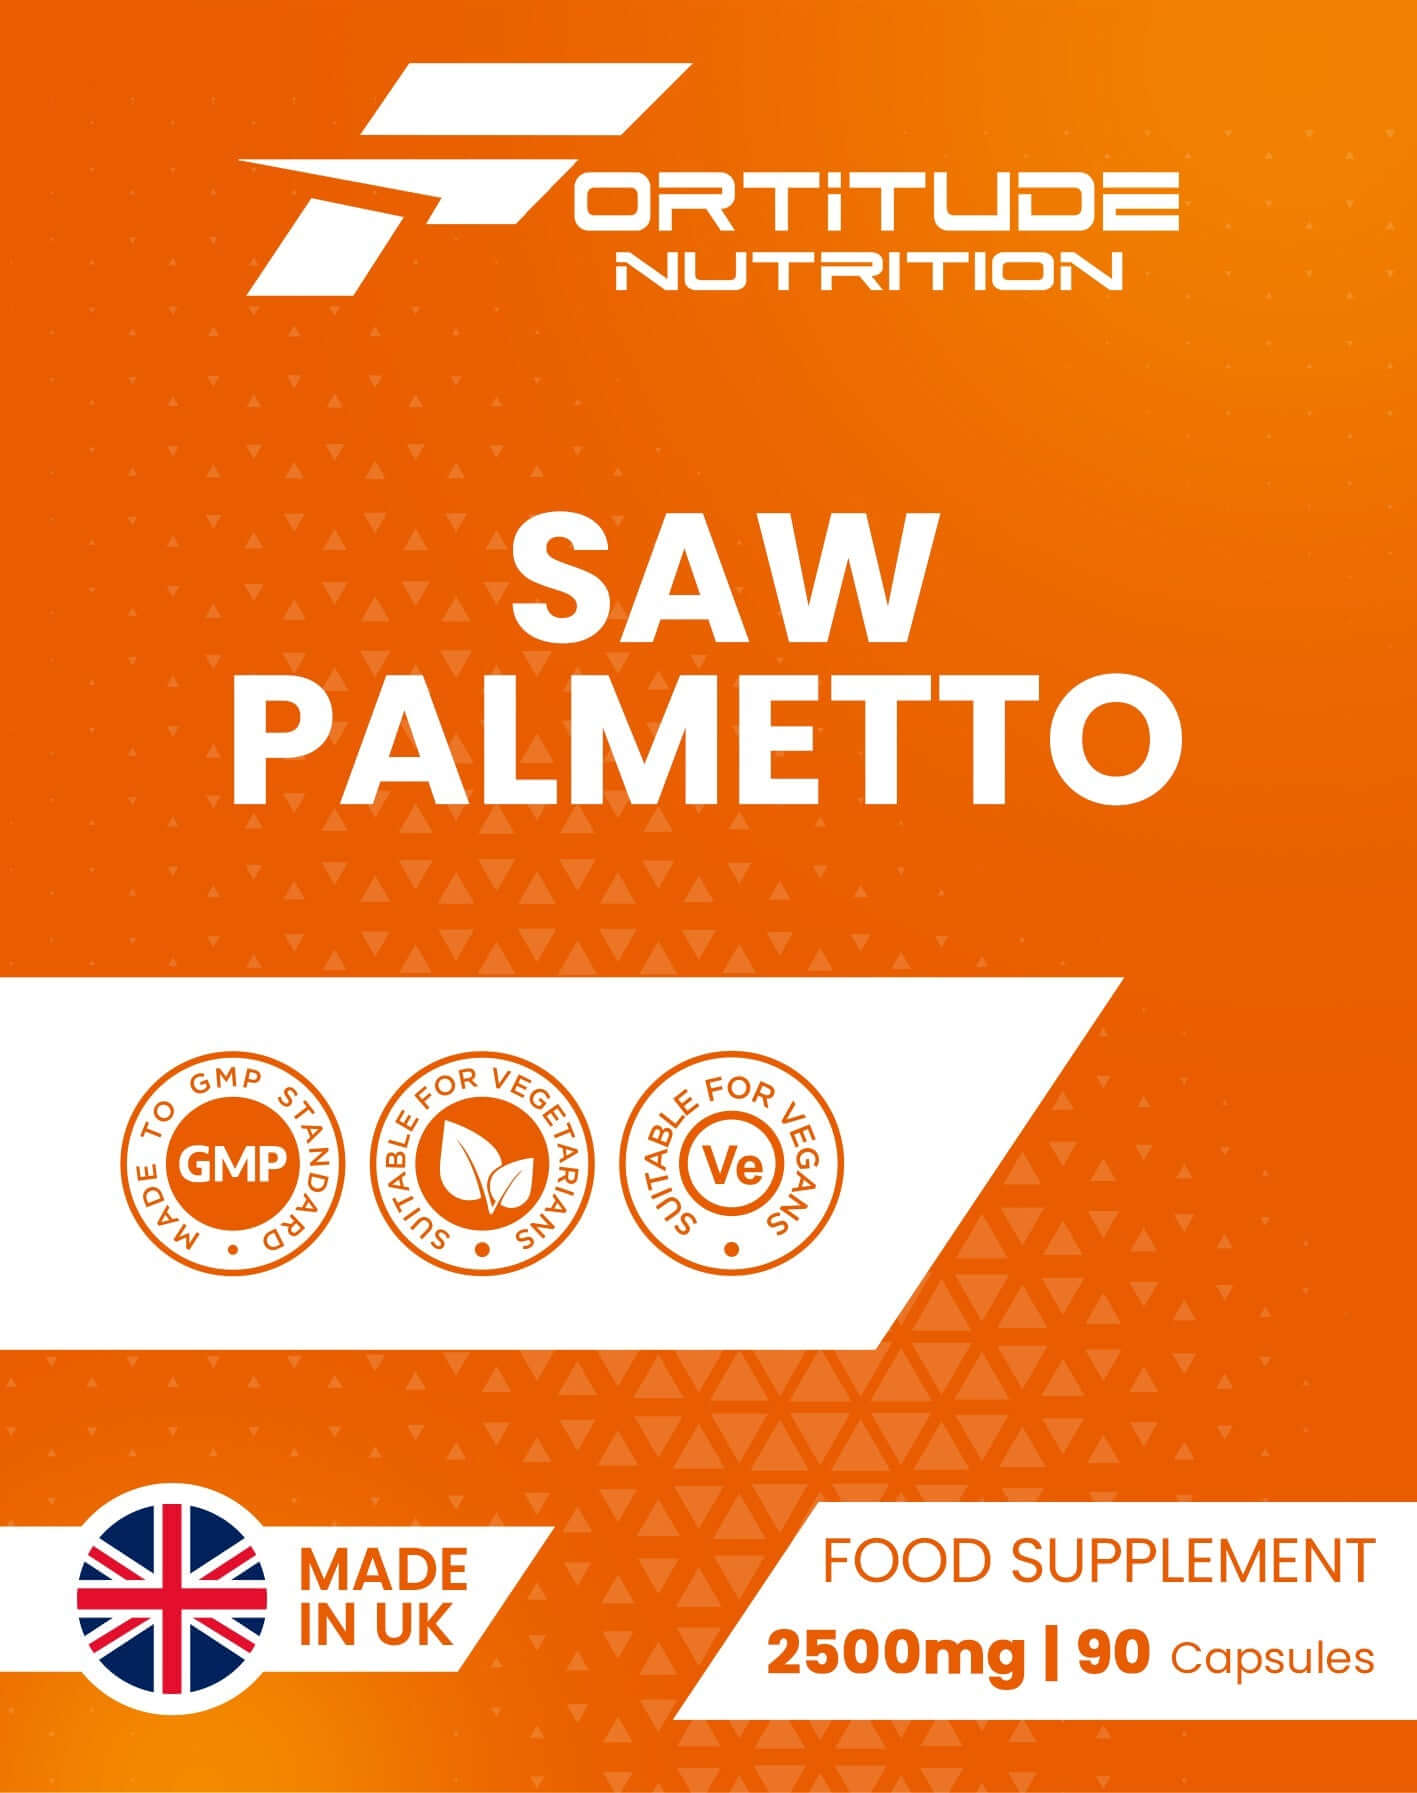 Fortitude Nutrition Saw Palmetto Capsules